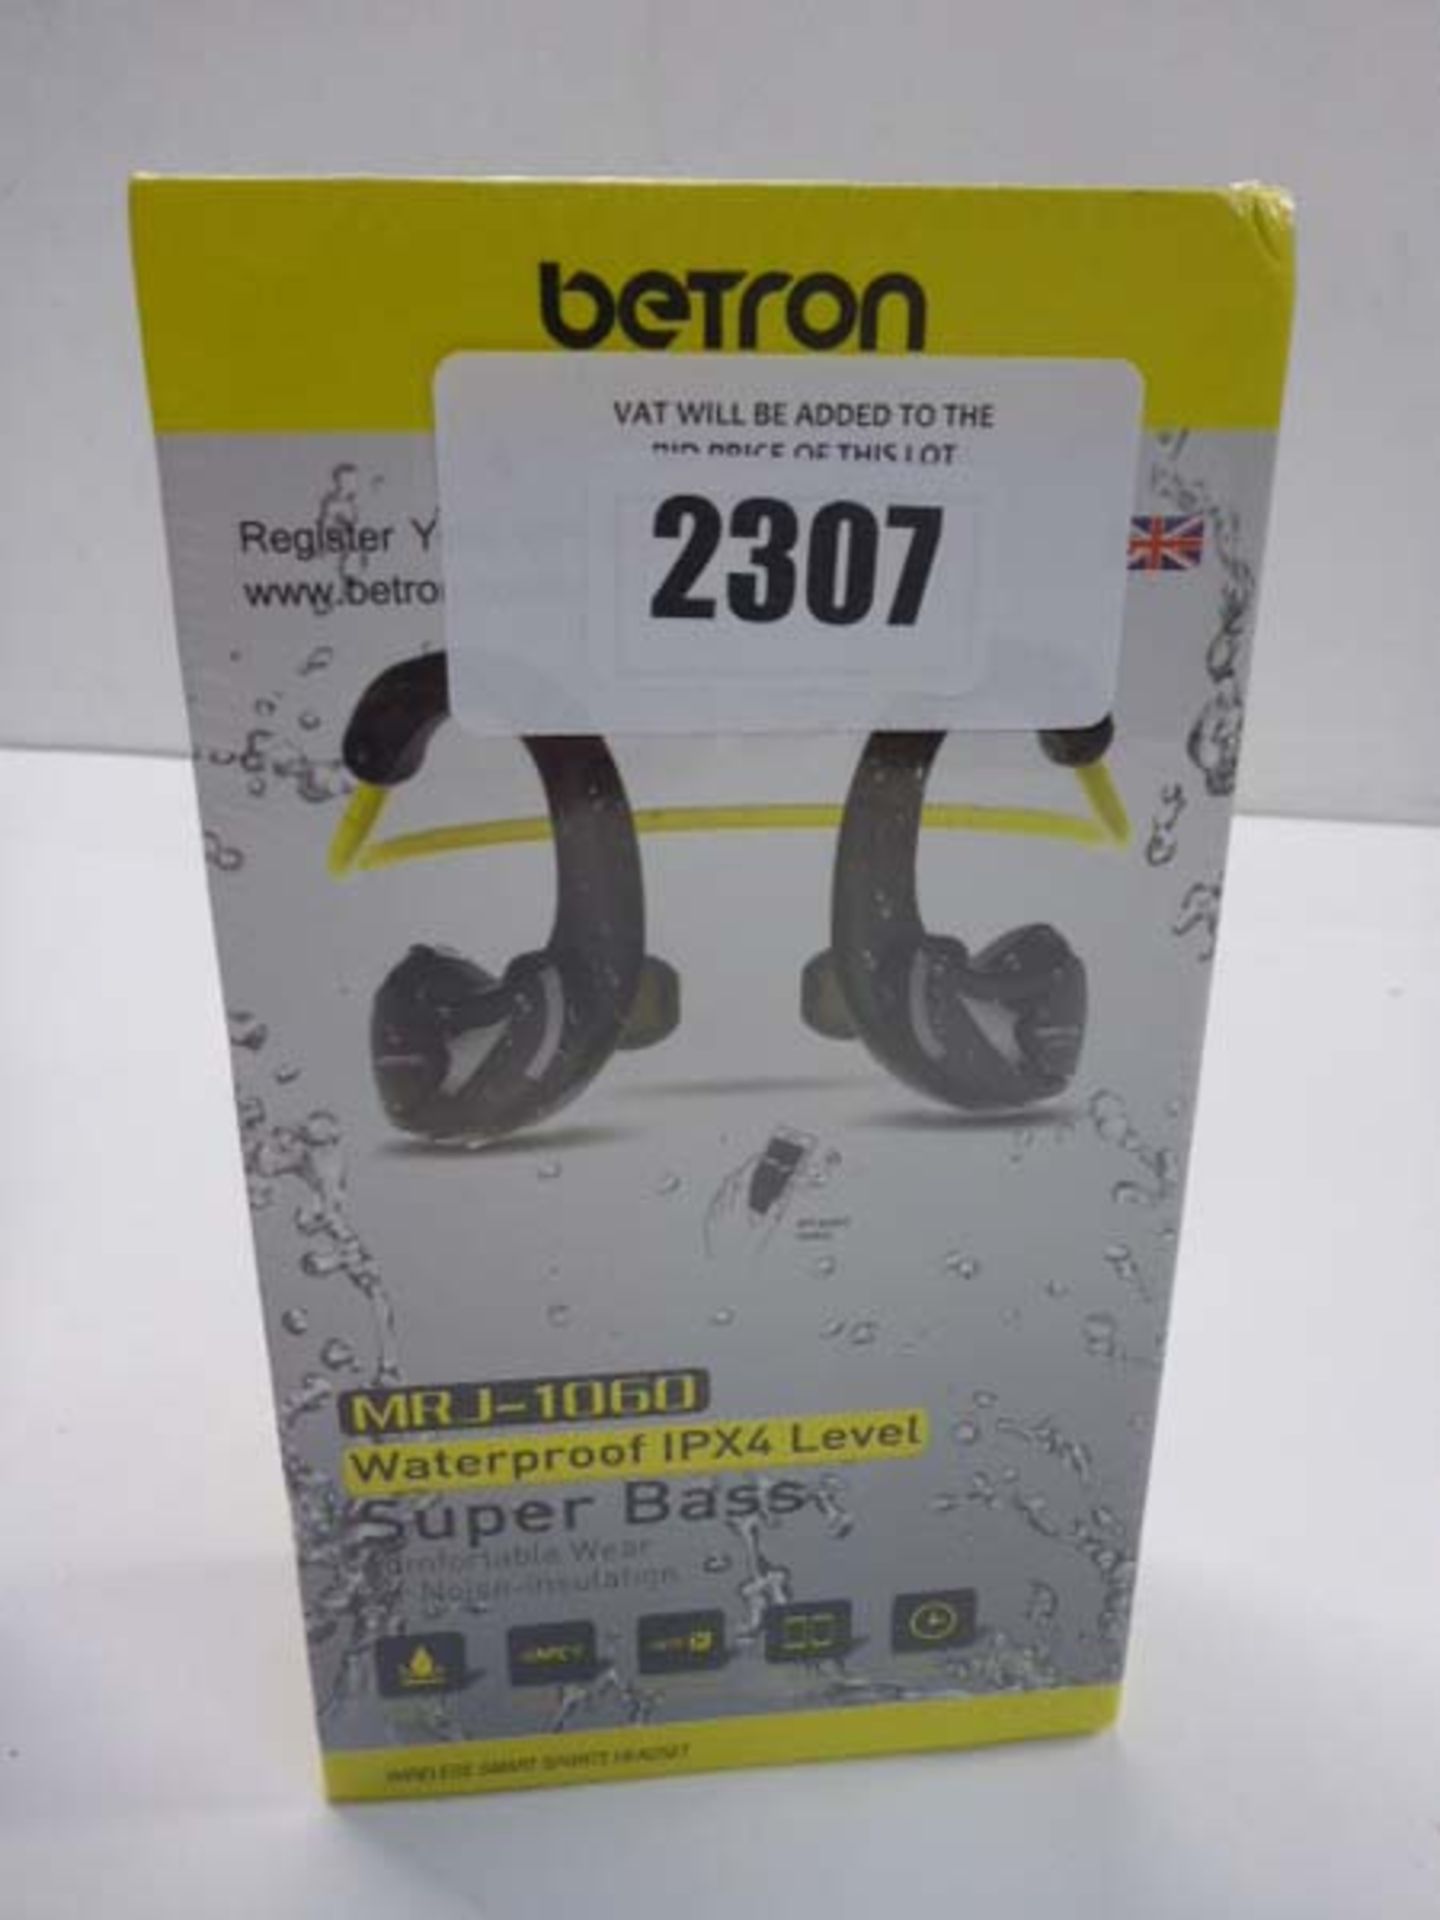 Betron MRJ-1060 Super Bass wireless earphones (sealed)